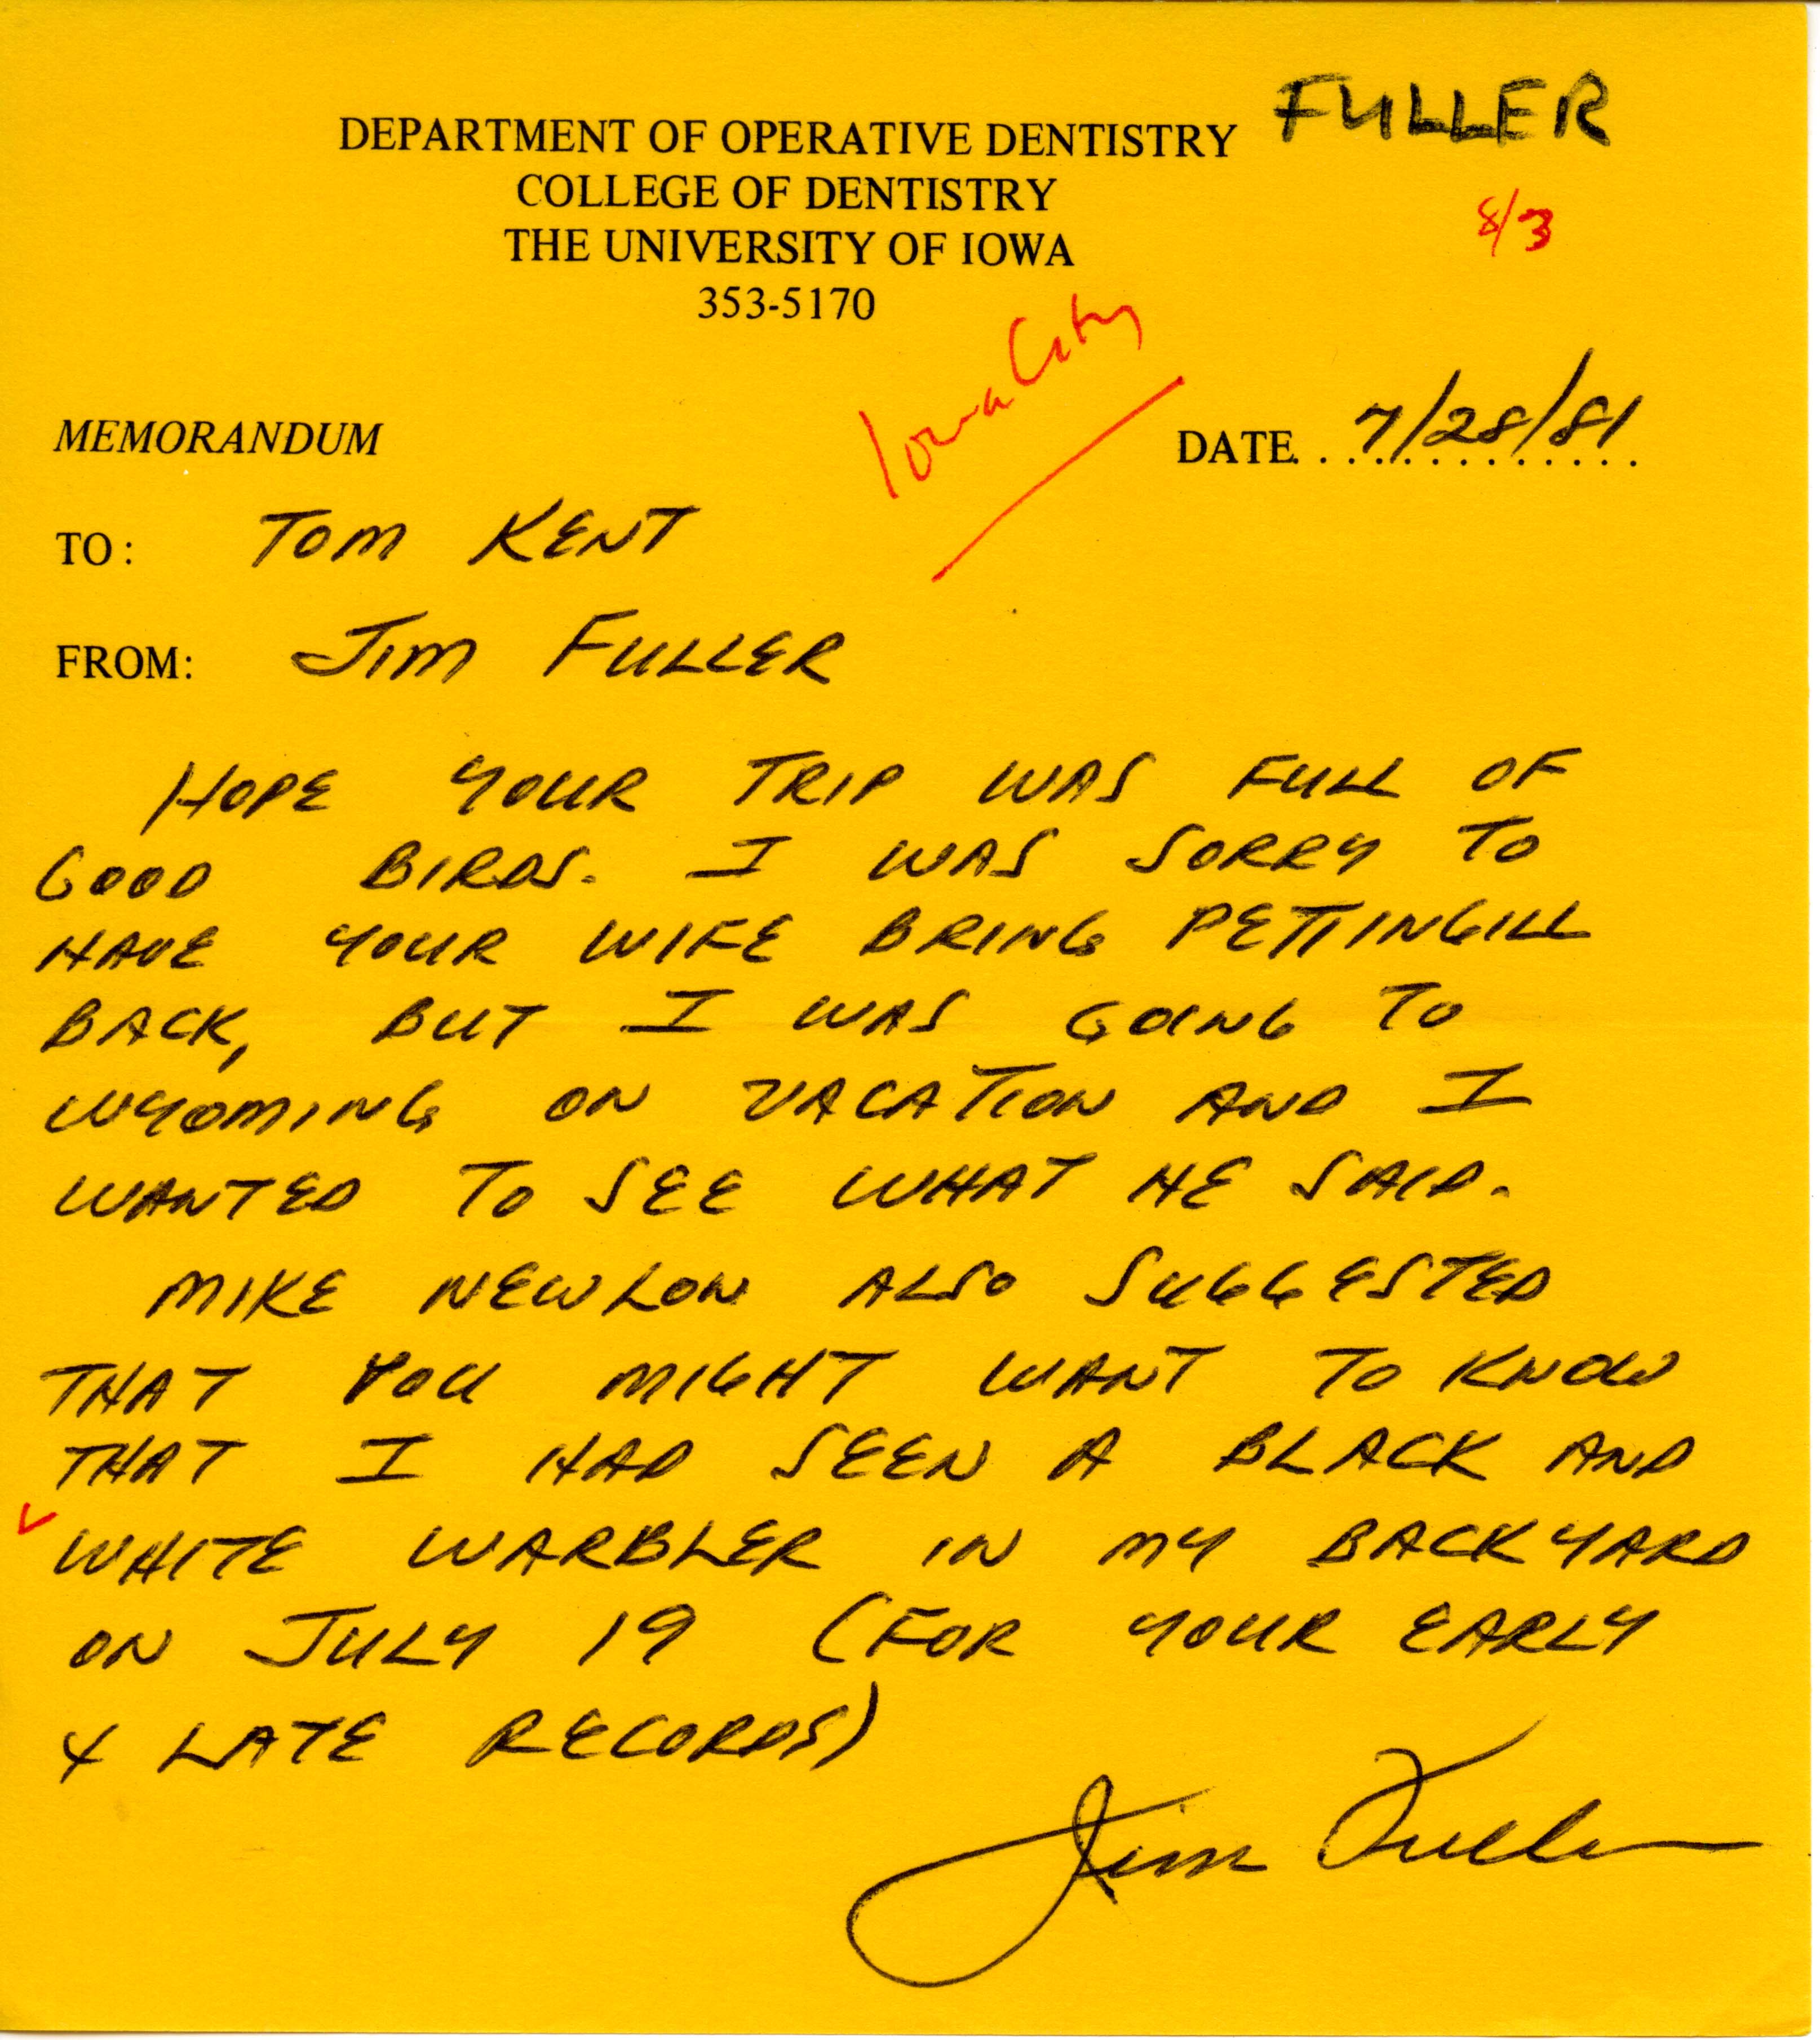 James L. Fuller letter to Thomas H. Kent regarding a Black-and-white Warbler sighting, July 28, 1981